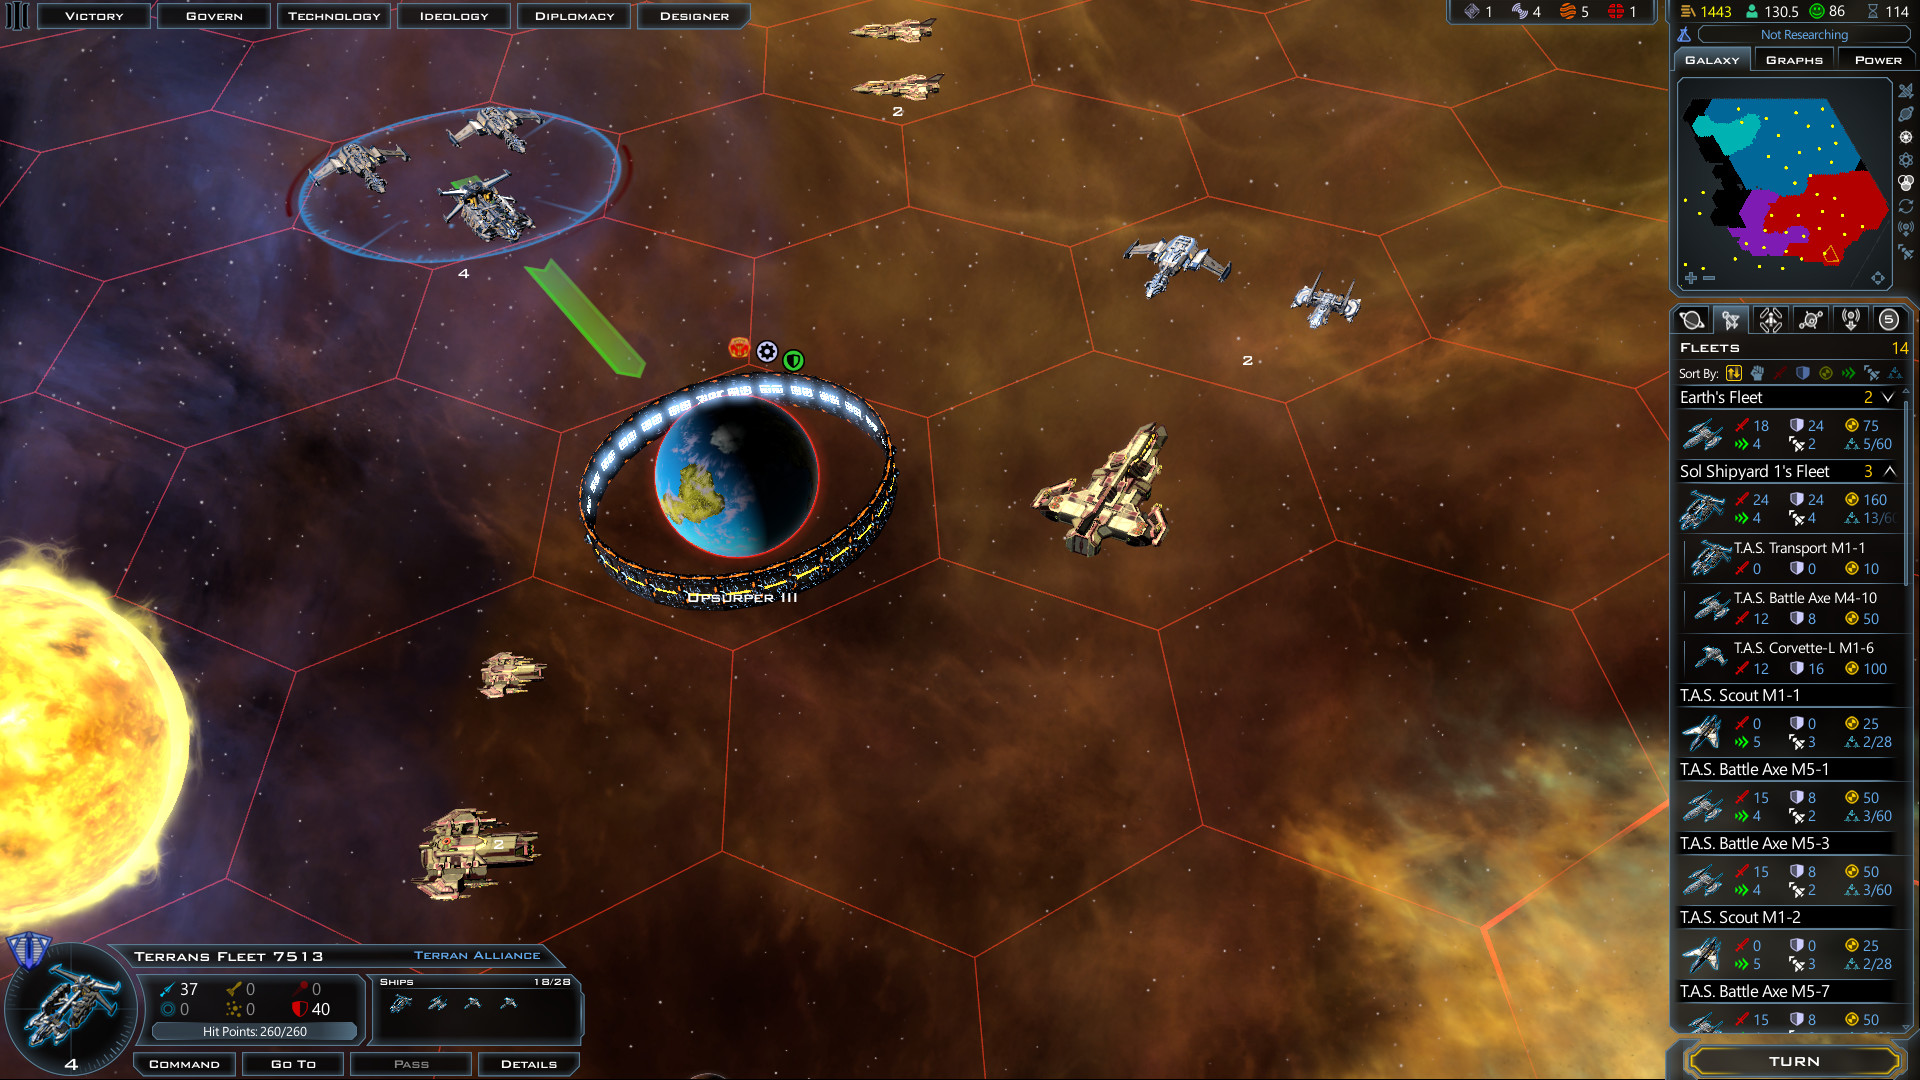 Galactic Civilizations III - Precursor Worlds DLC screenshot